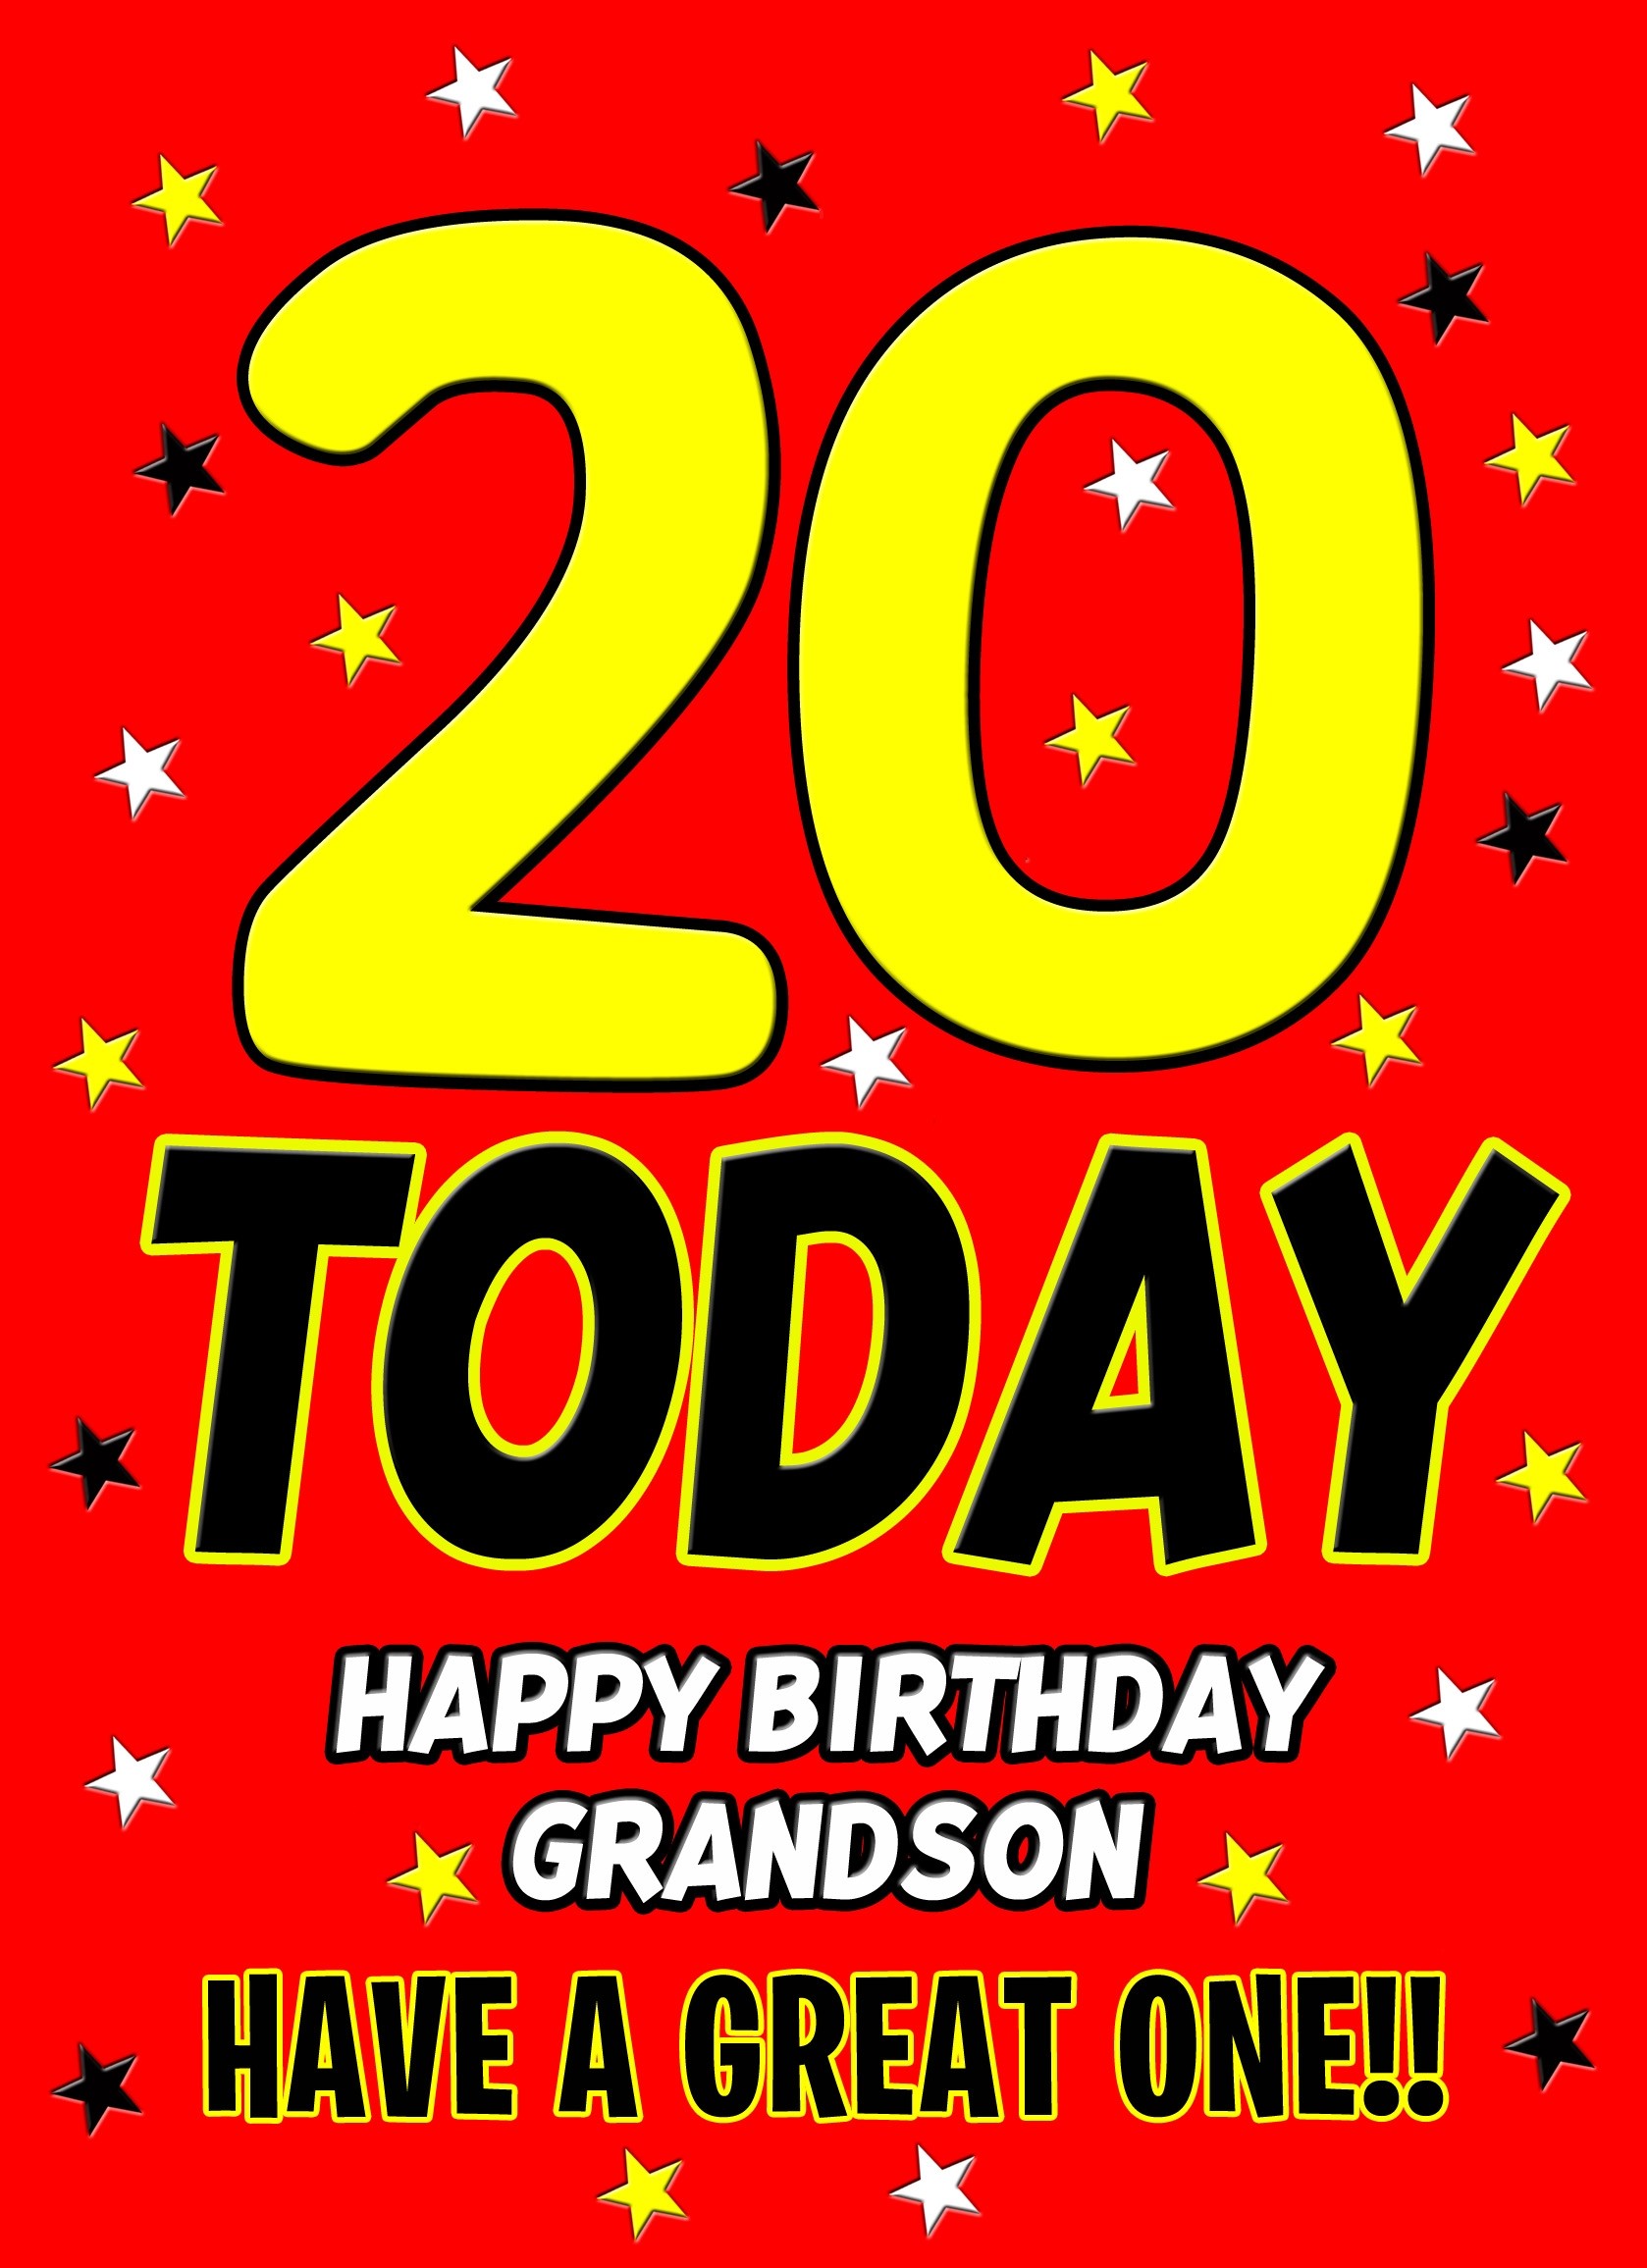 20 Today Birthday Card (Grandson)